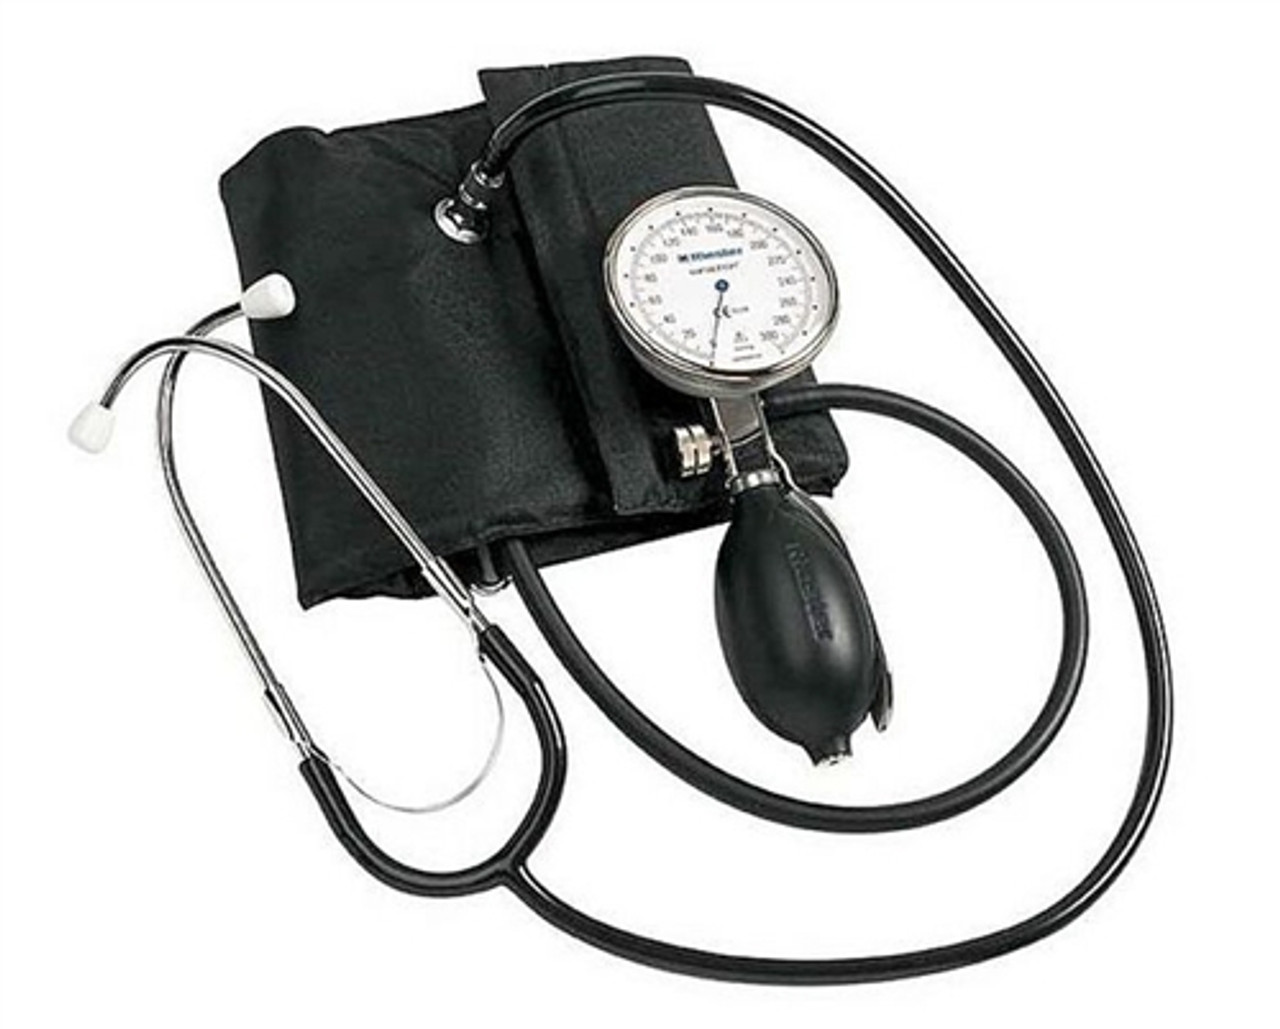 Self Measuring Blood Pressure Apparatus